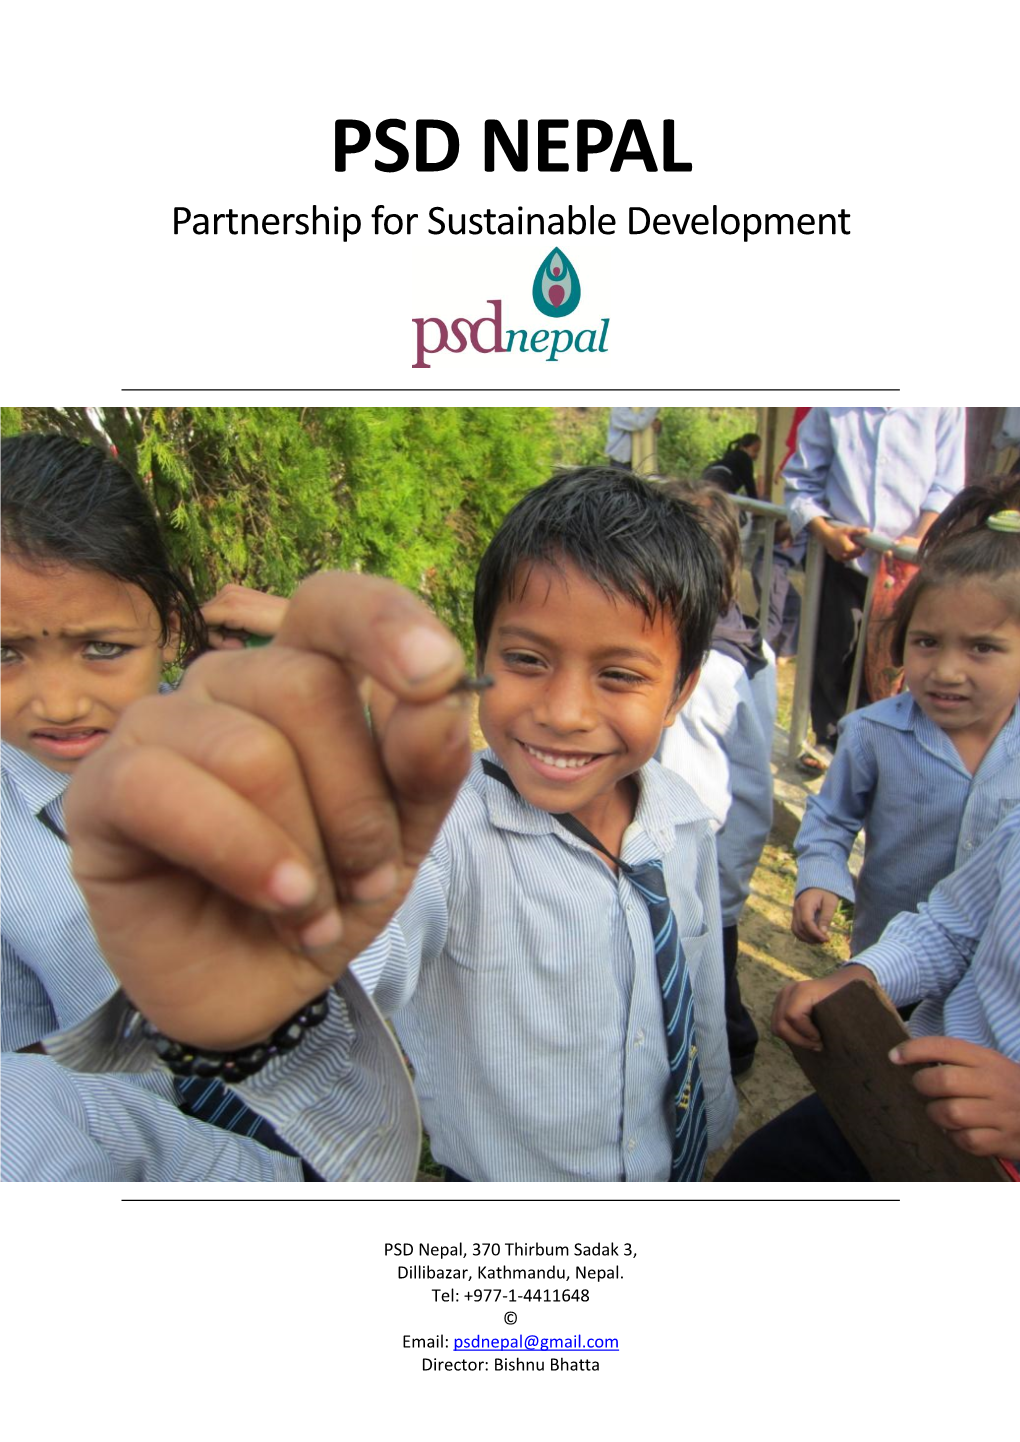 PSD NEPAL Partnership for Sustainable Development